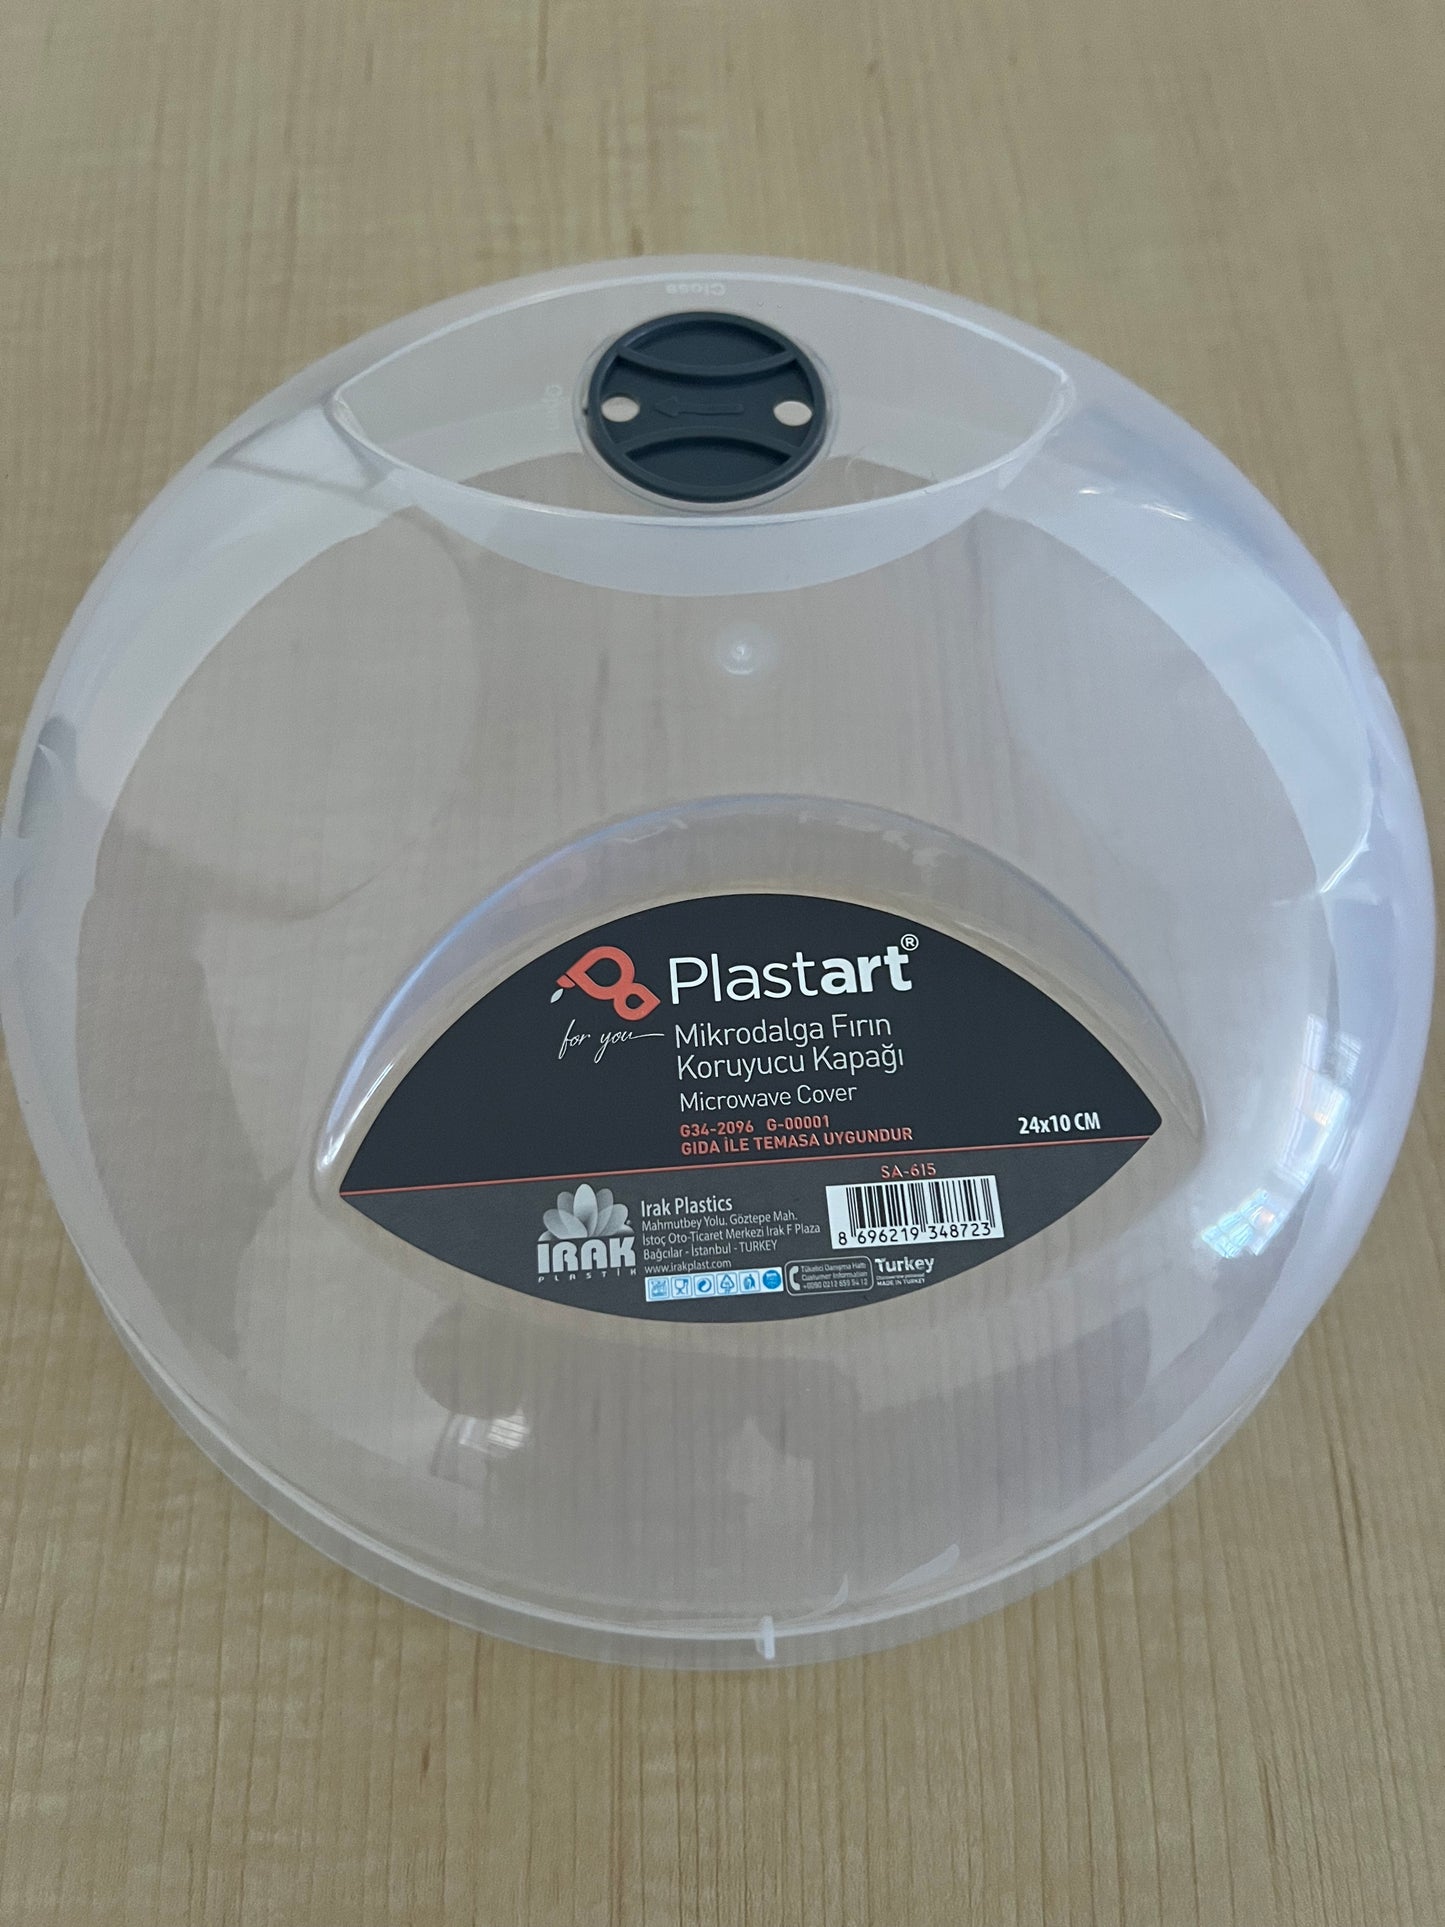 Plastart Microwave Plate Cover